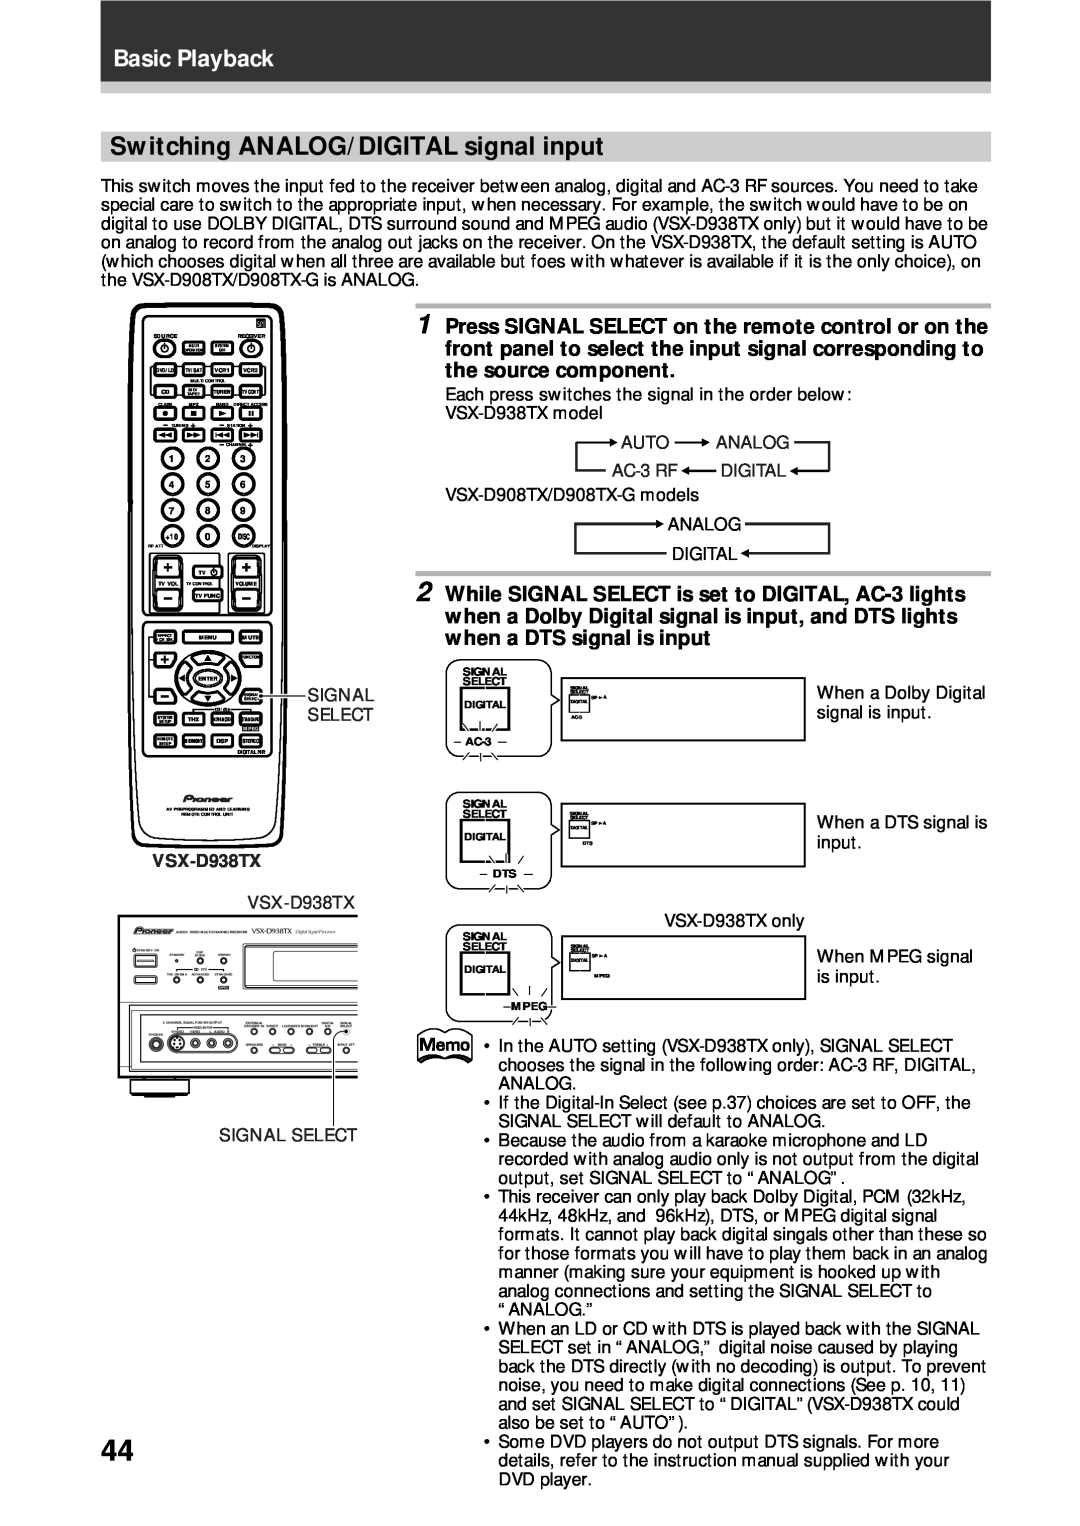 Pioneer VSX-D938TX, VSX-D908TX-G manual Switching ANALOG/DIGITAL signal input, Basic Playback 